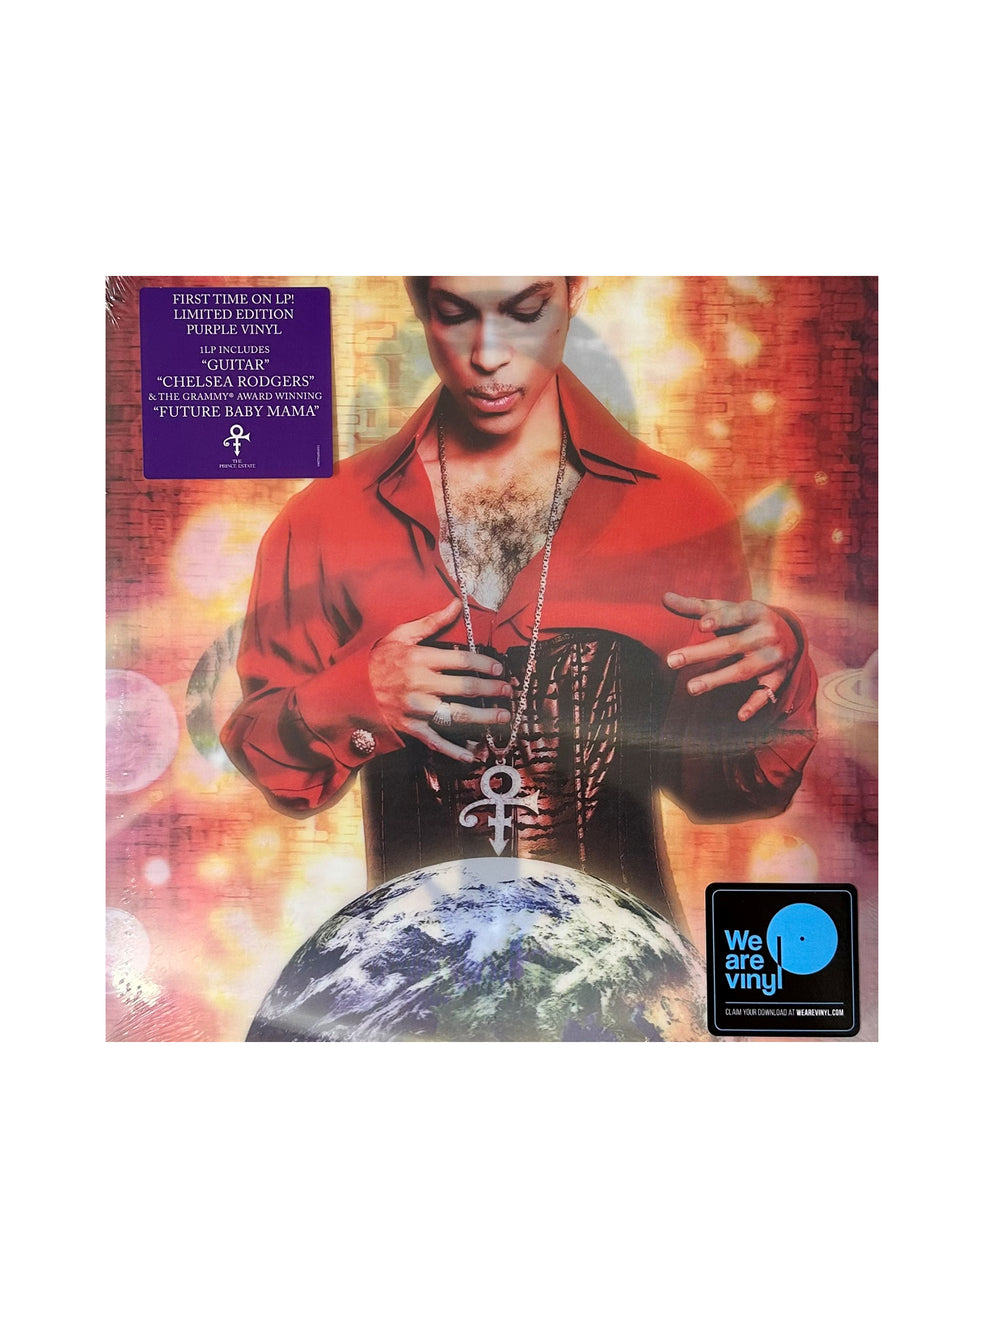 Prince – Planet Earth CD Album RE Digipak Lenticular Sony Legacy NEW:2019